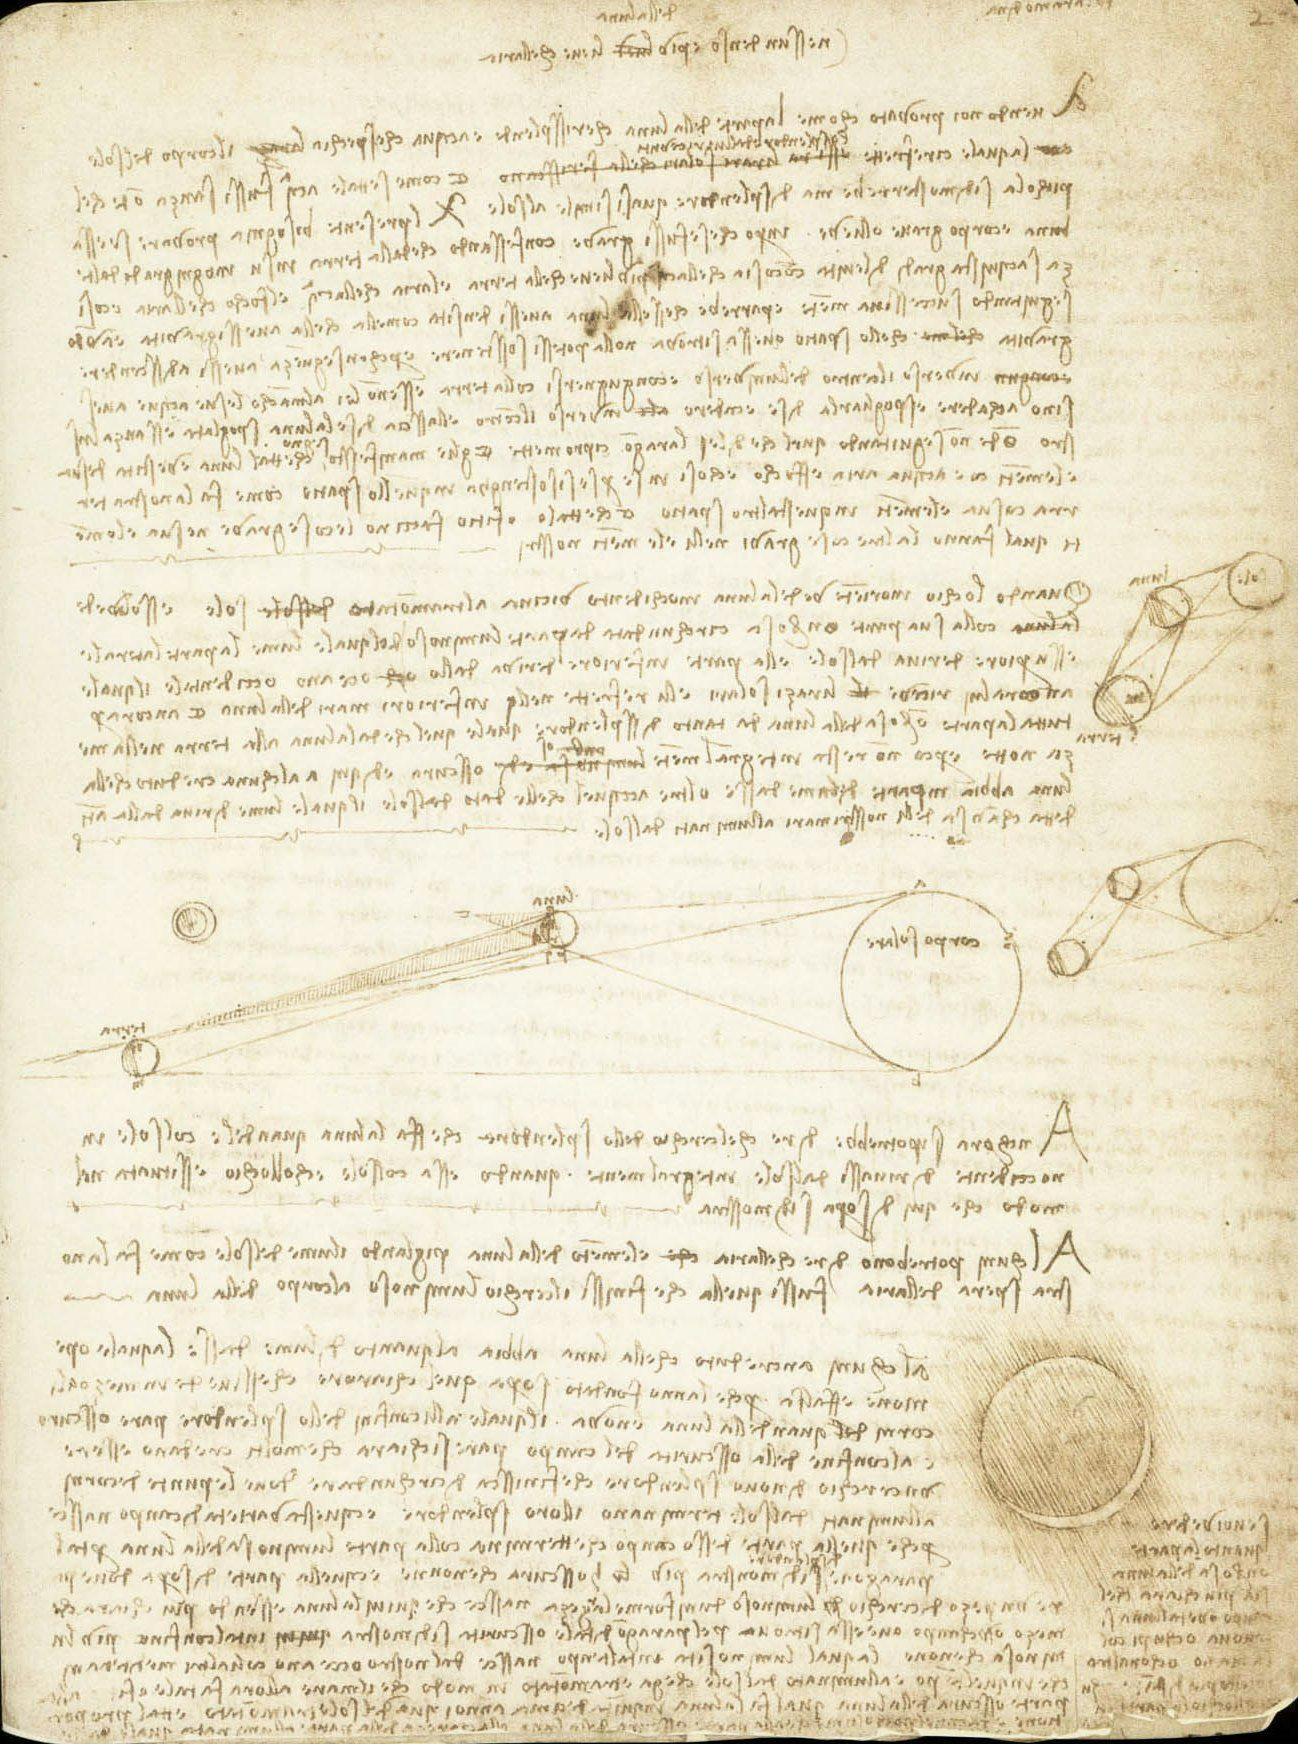 Water as Microscope of Nature. Leonardo da Vinci’s Codex Leicester